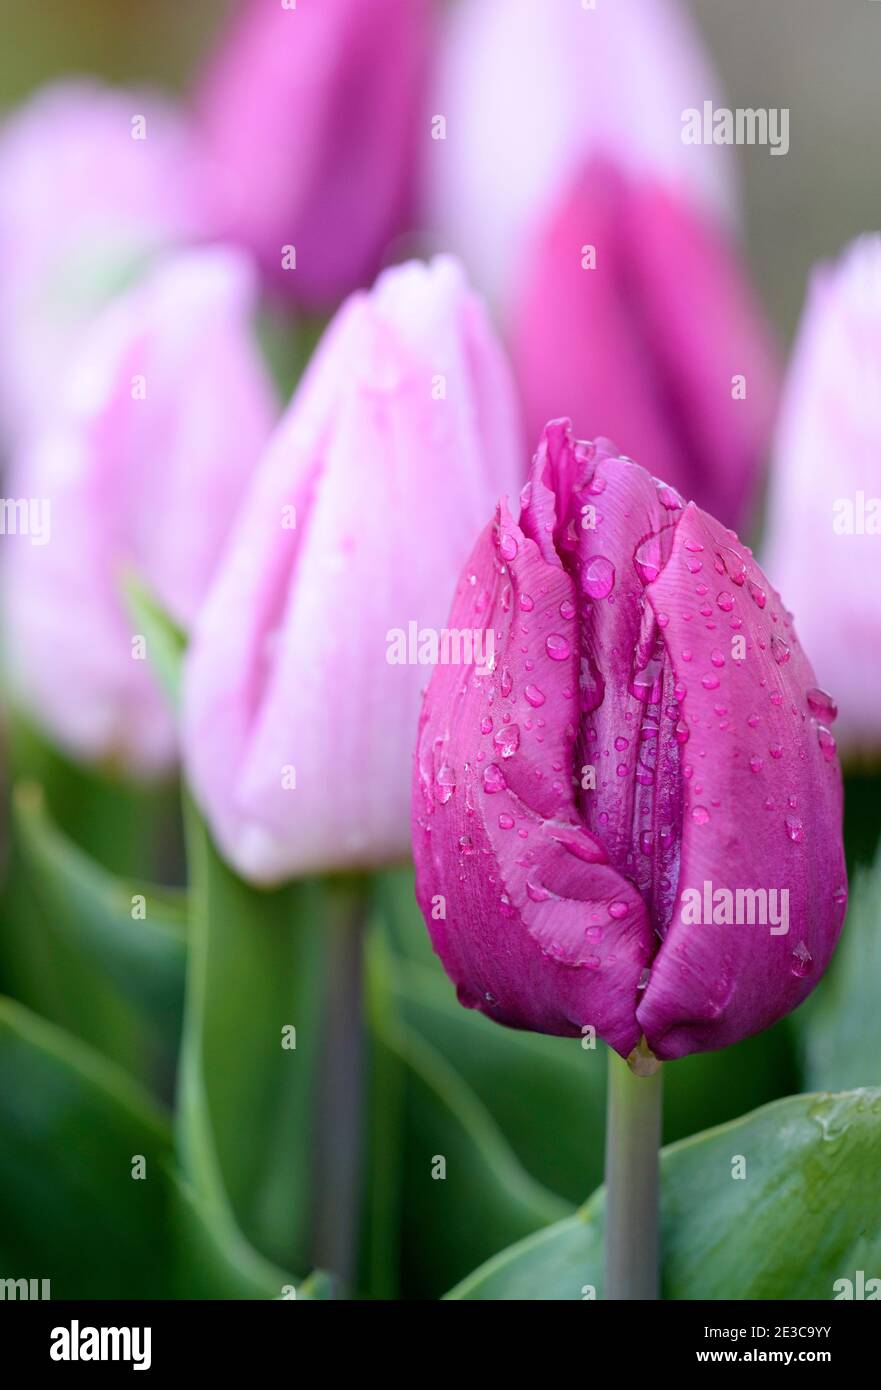 Tulipa "Principe viola". Tulip "Purple Prince" Foto Stock